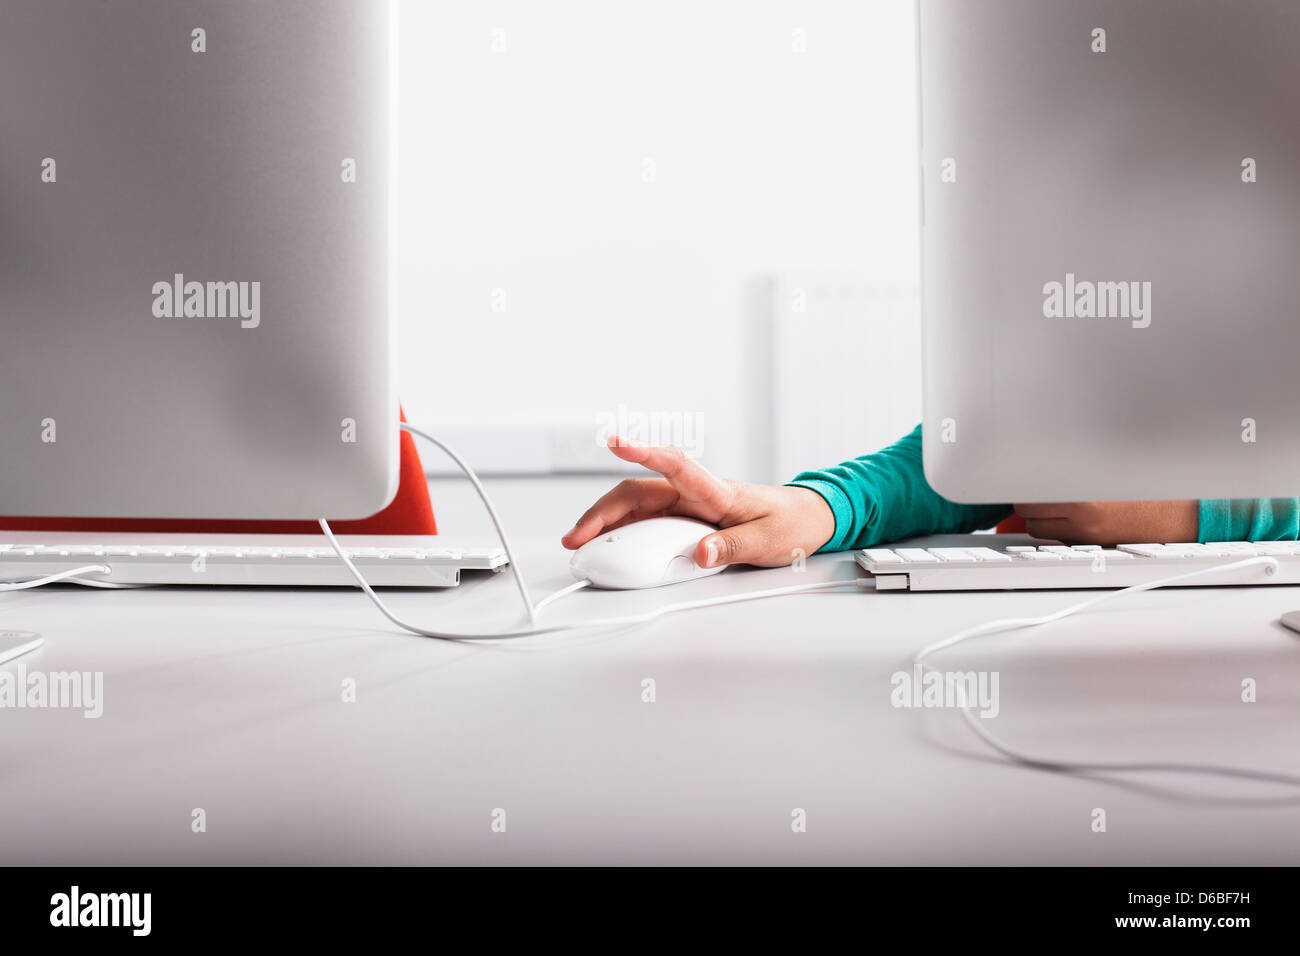 Girl using computer at desk Banque D'Images